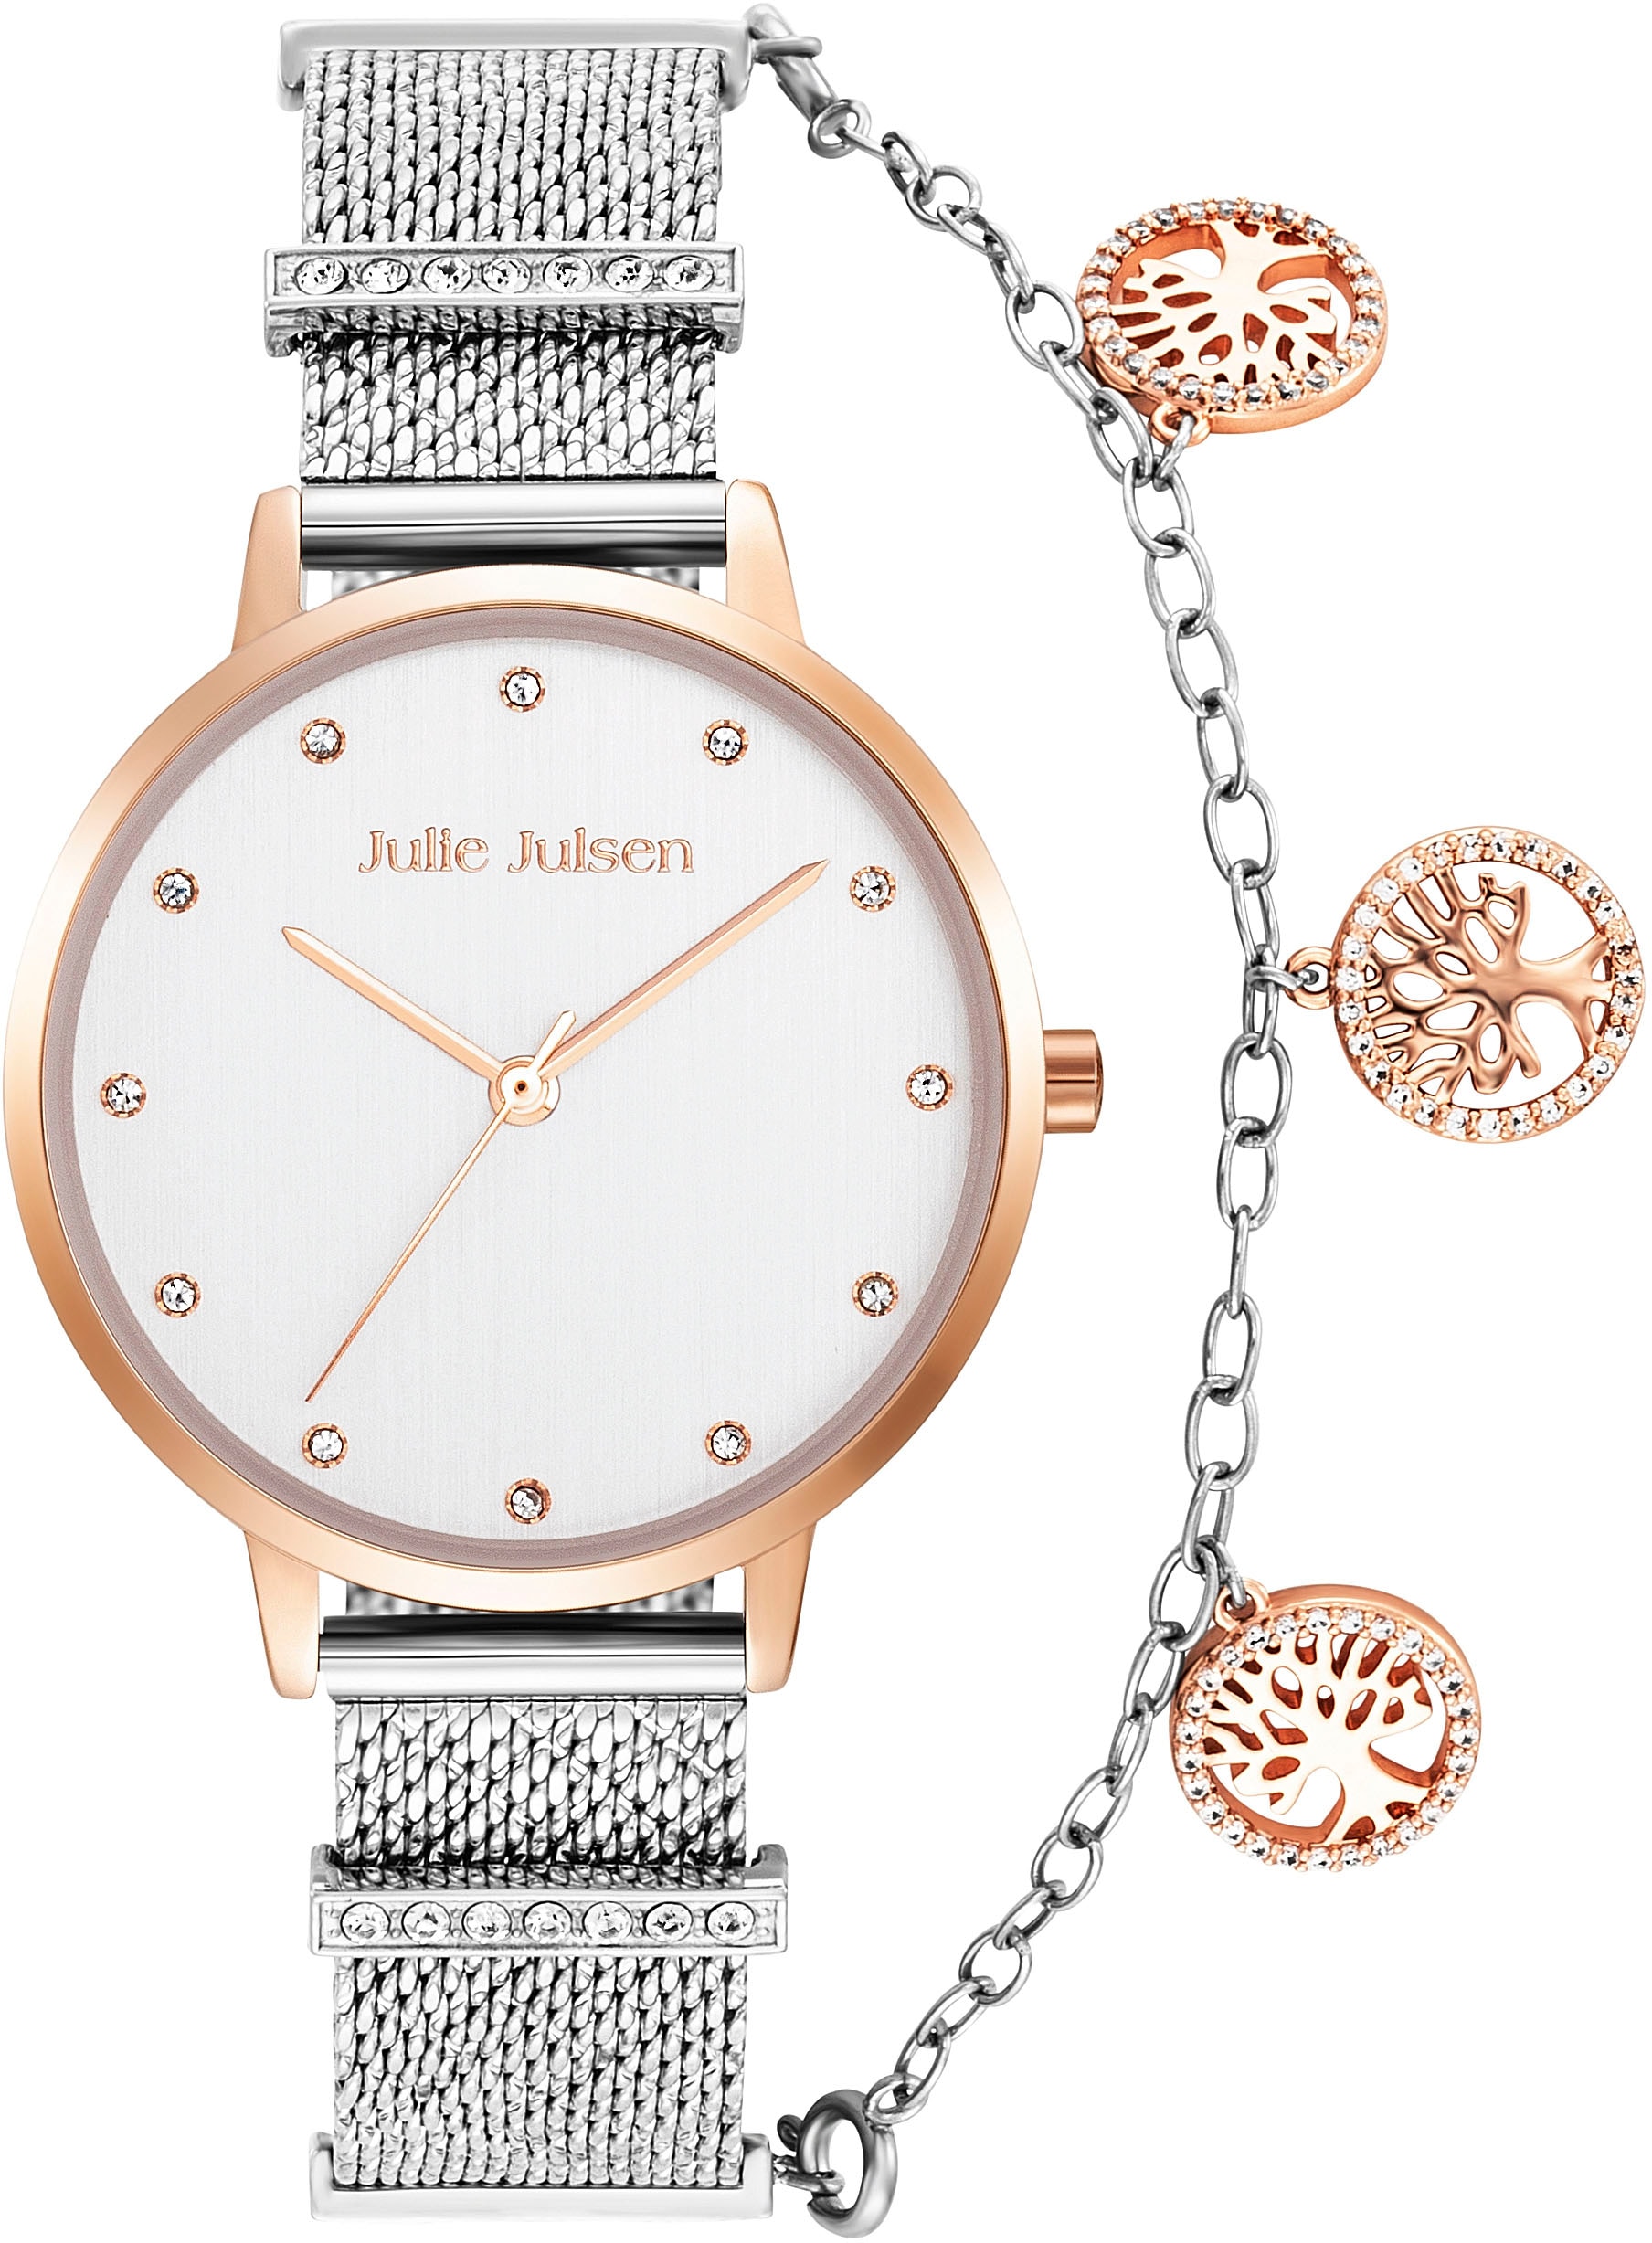 Julie Julsen Quarzuhr »Julie Julsen Charming Bicolor Dots, JJW1231RGSME-34-1«, Armbanduhr, Damenuhr, Charminguhr, Glitzer, Mineralglas